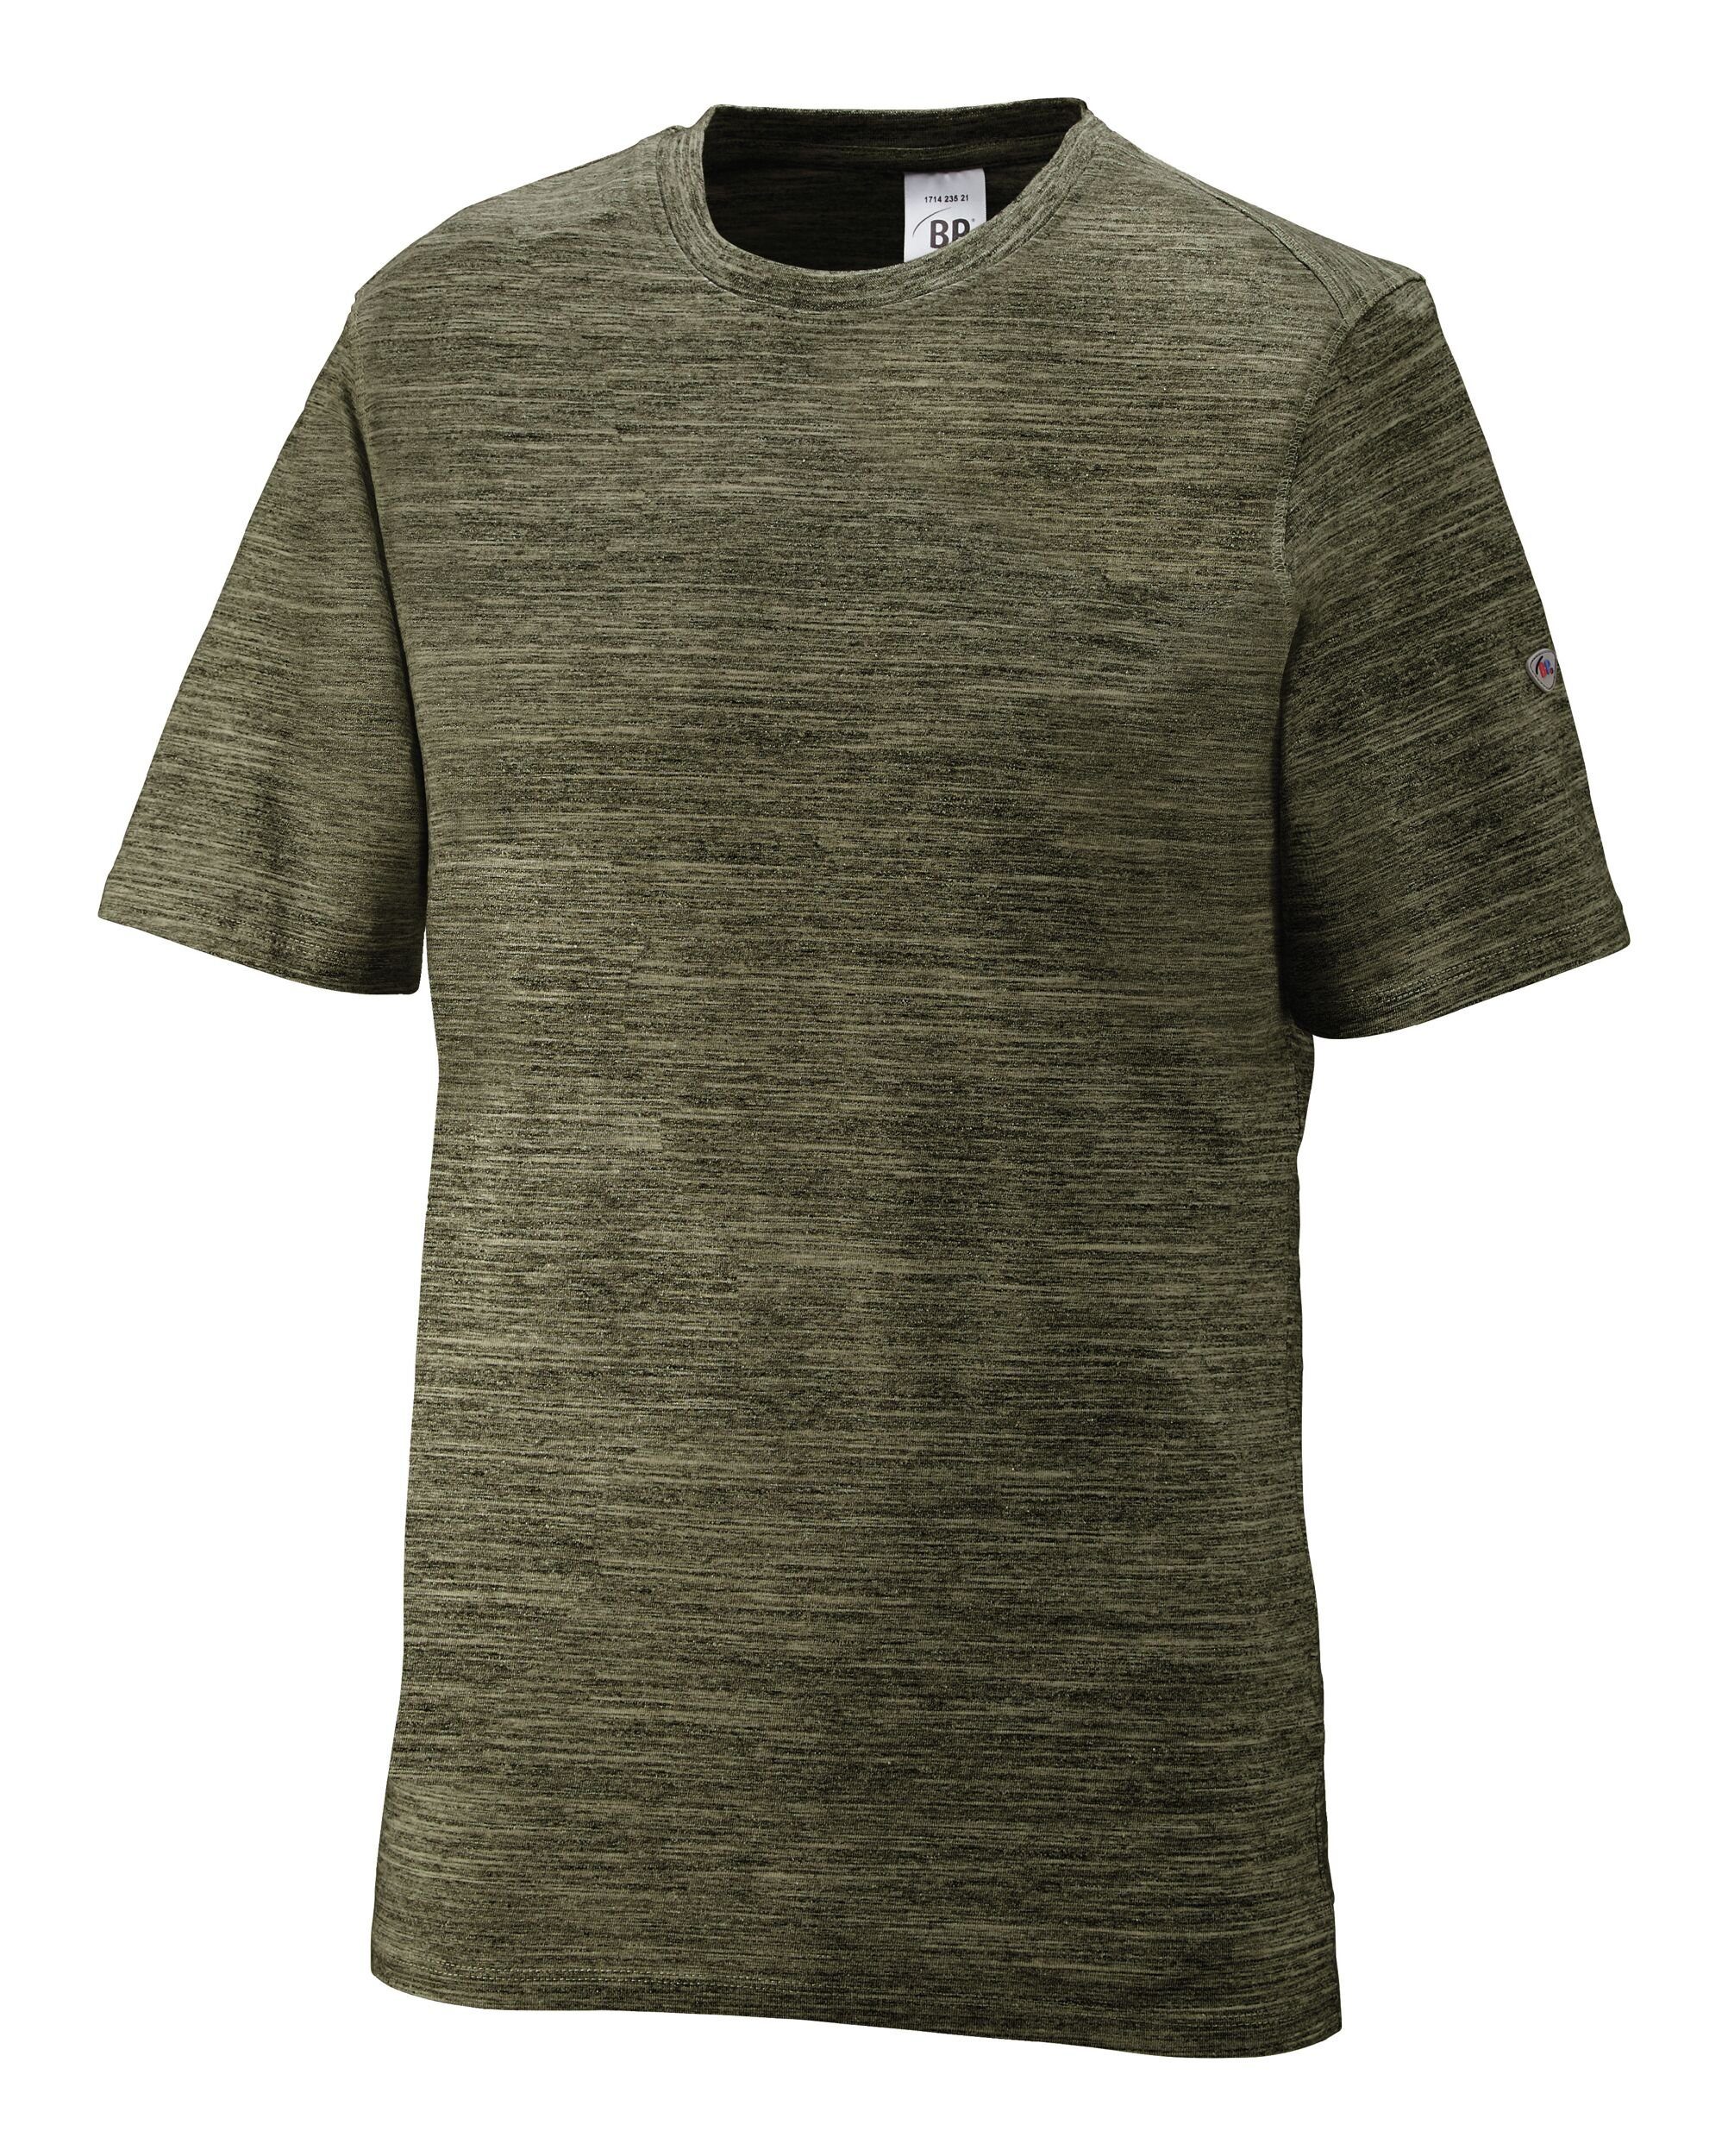 bp T-Shirt 1714, space oliv, Größe 2XL